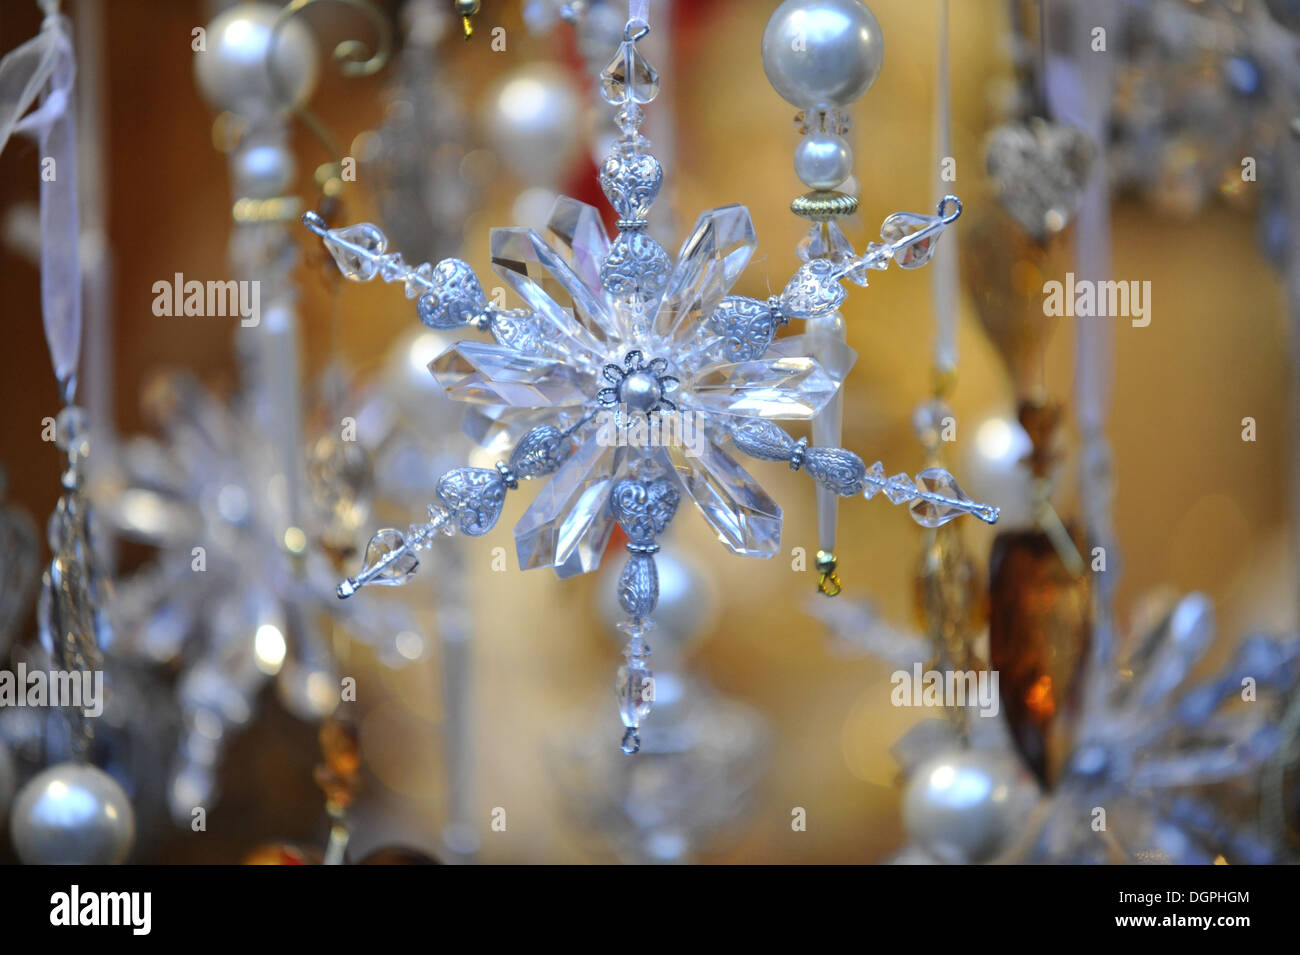 snow flake of glass at christmas market Stock Photo